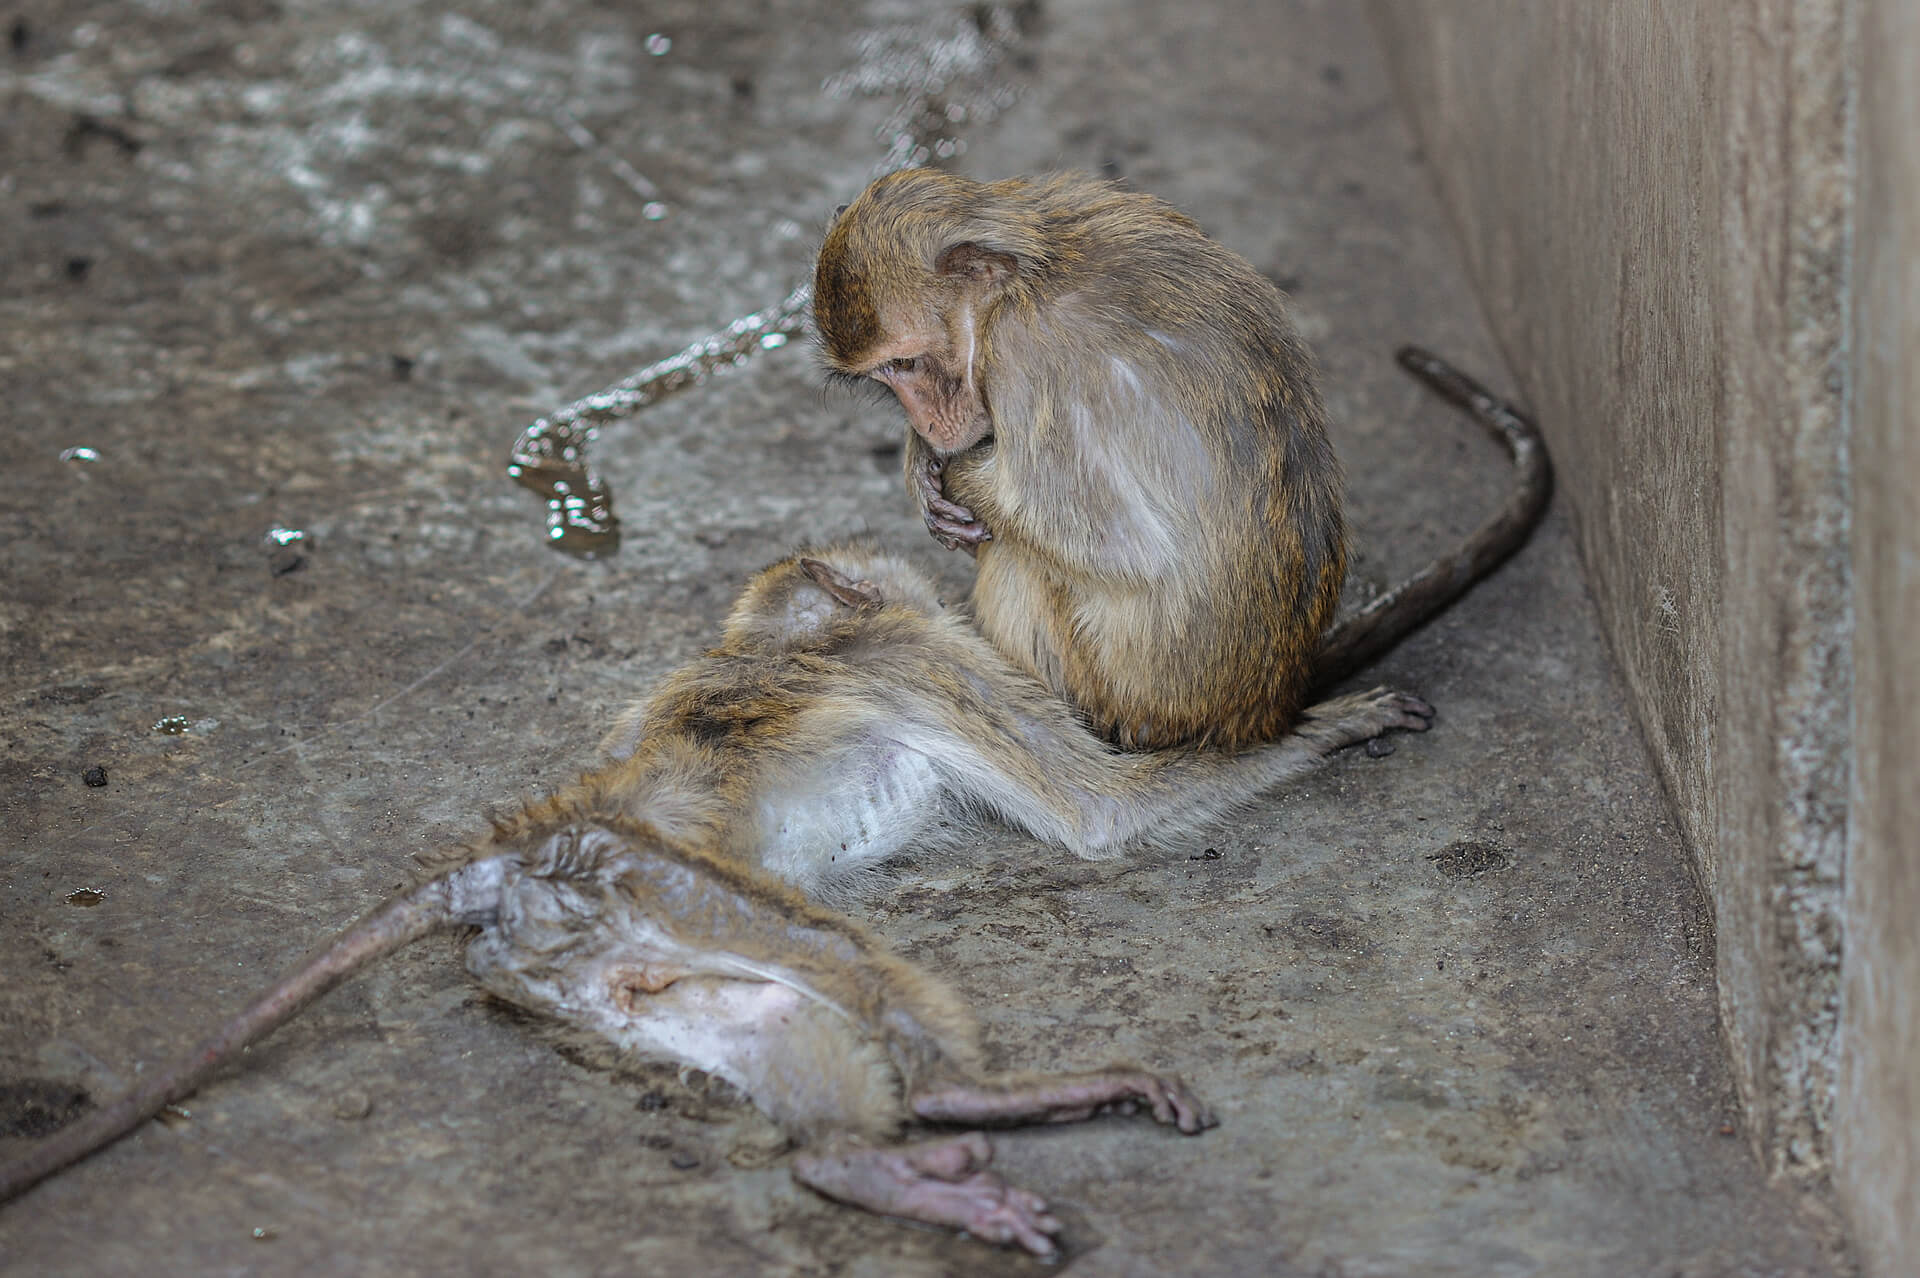 https://investigaciones.petalatino.com/wp-content/uploads/2022/07/VIV-Monkey-A-dead-macaque-at-macaque-breeding-facility-Jo-Anne-McArthur-We-Animals-Media-WAM10528.jpg